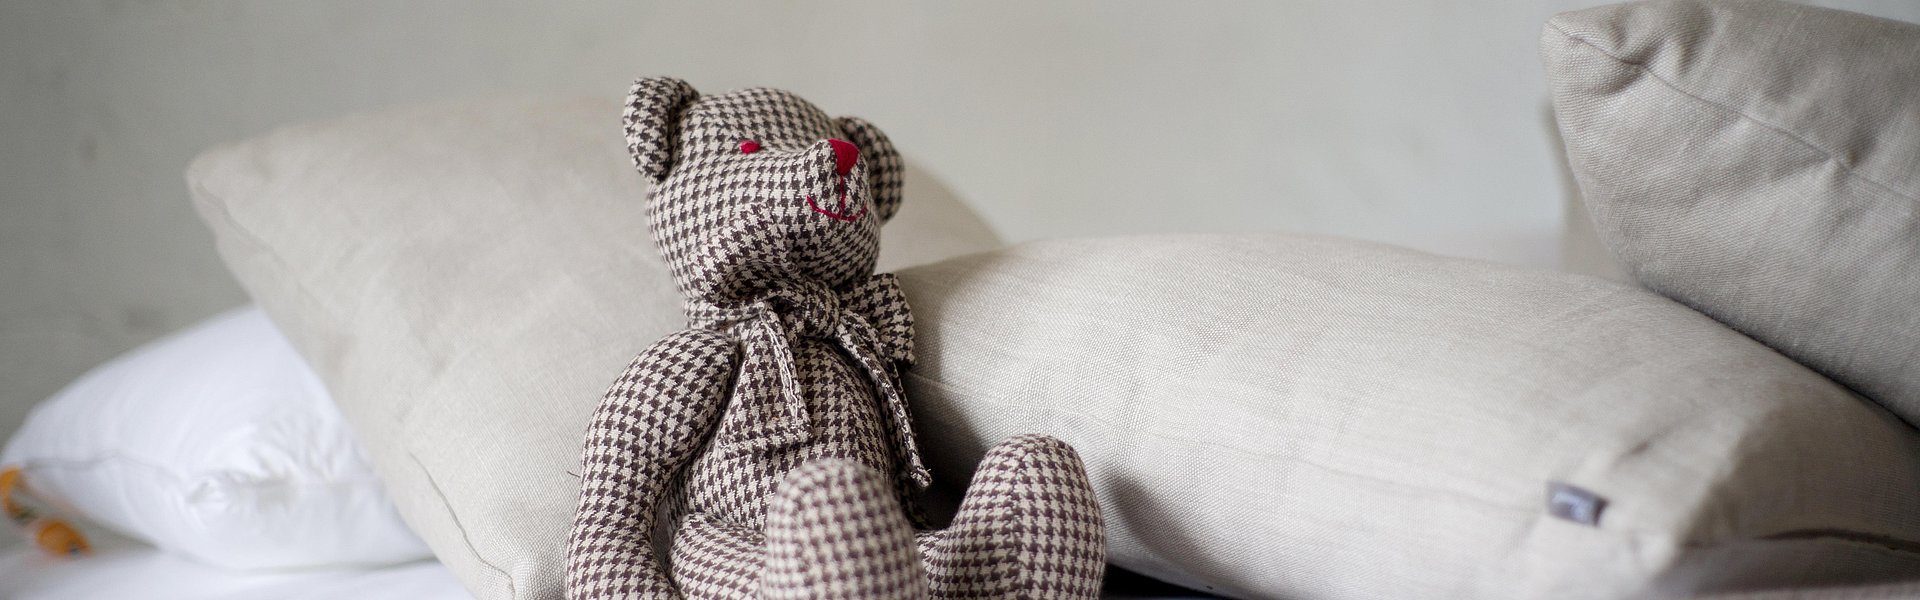 Teddy © Pixabay Engin_Akyurt